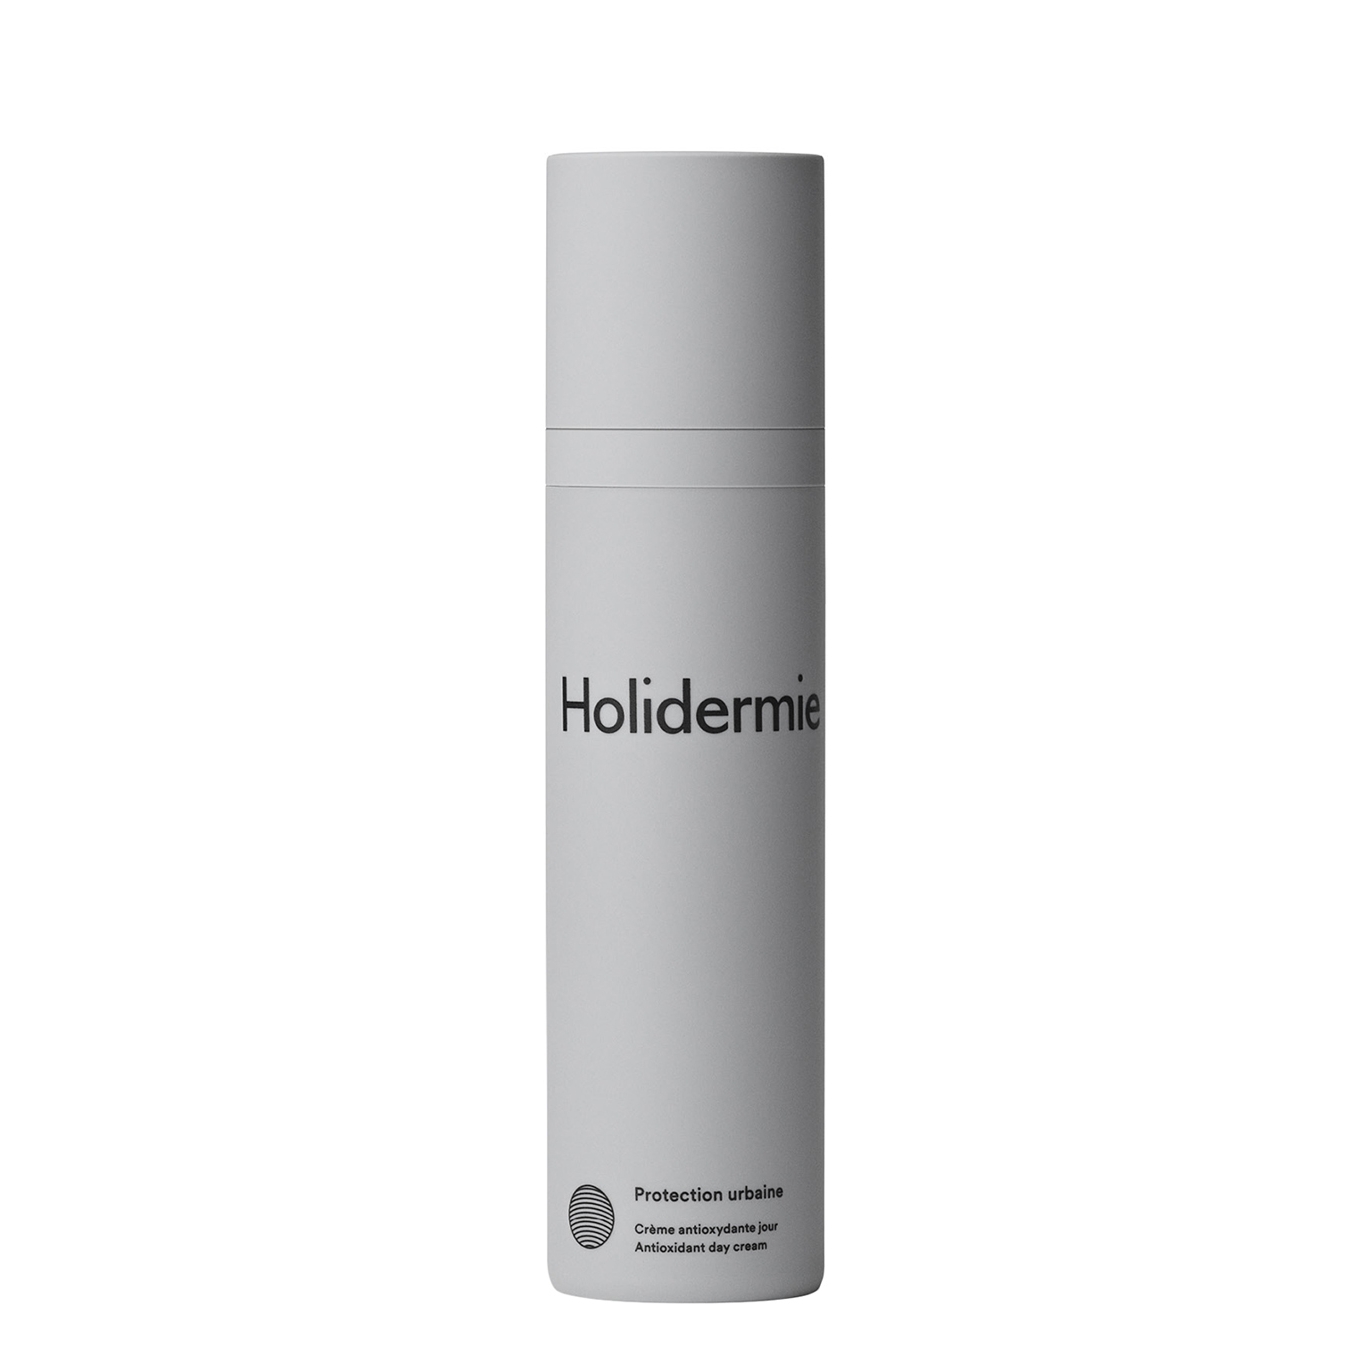 Holidermie Protection Urbaine Antioxidant Day Cream 50ml